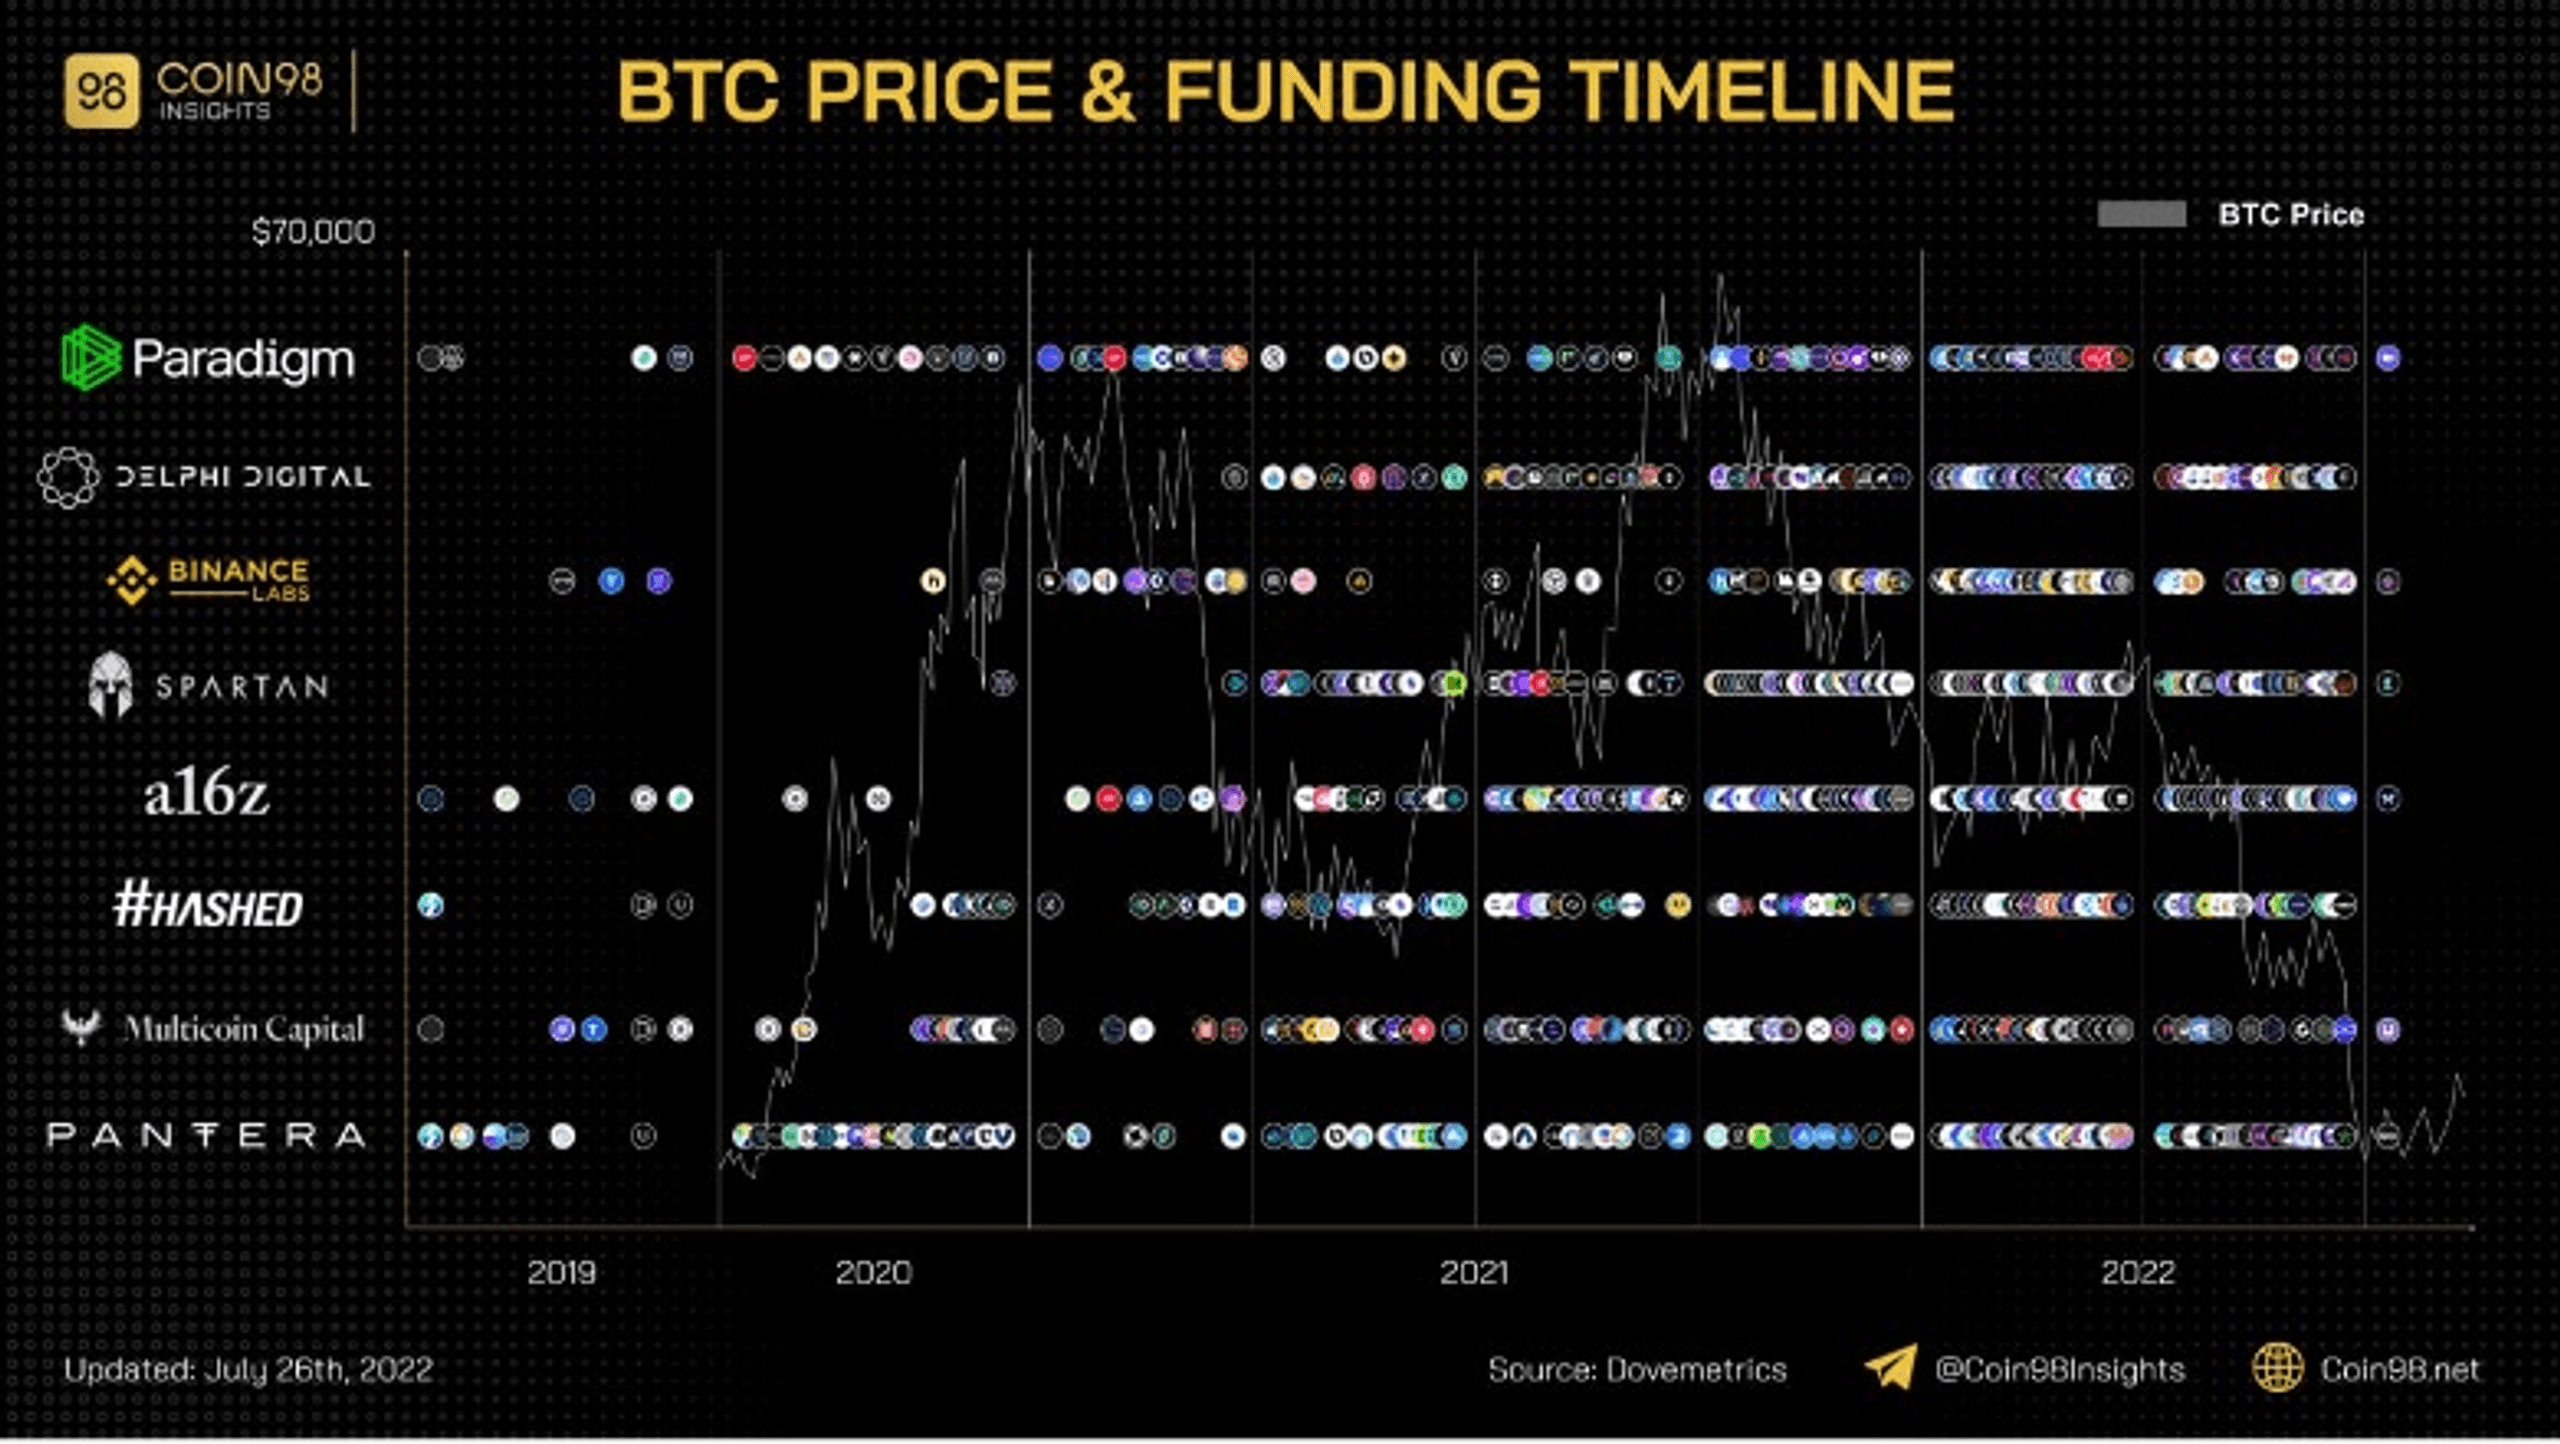 btc price and funding timeline